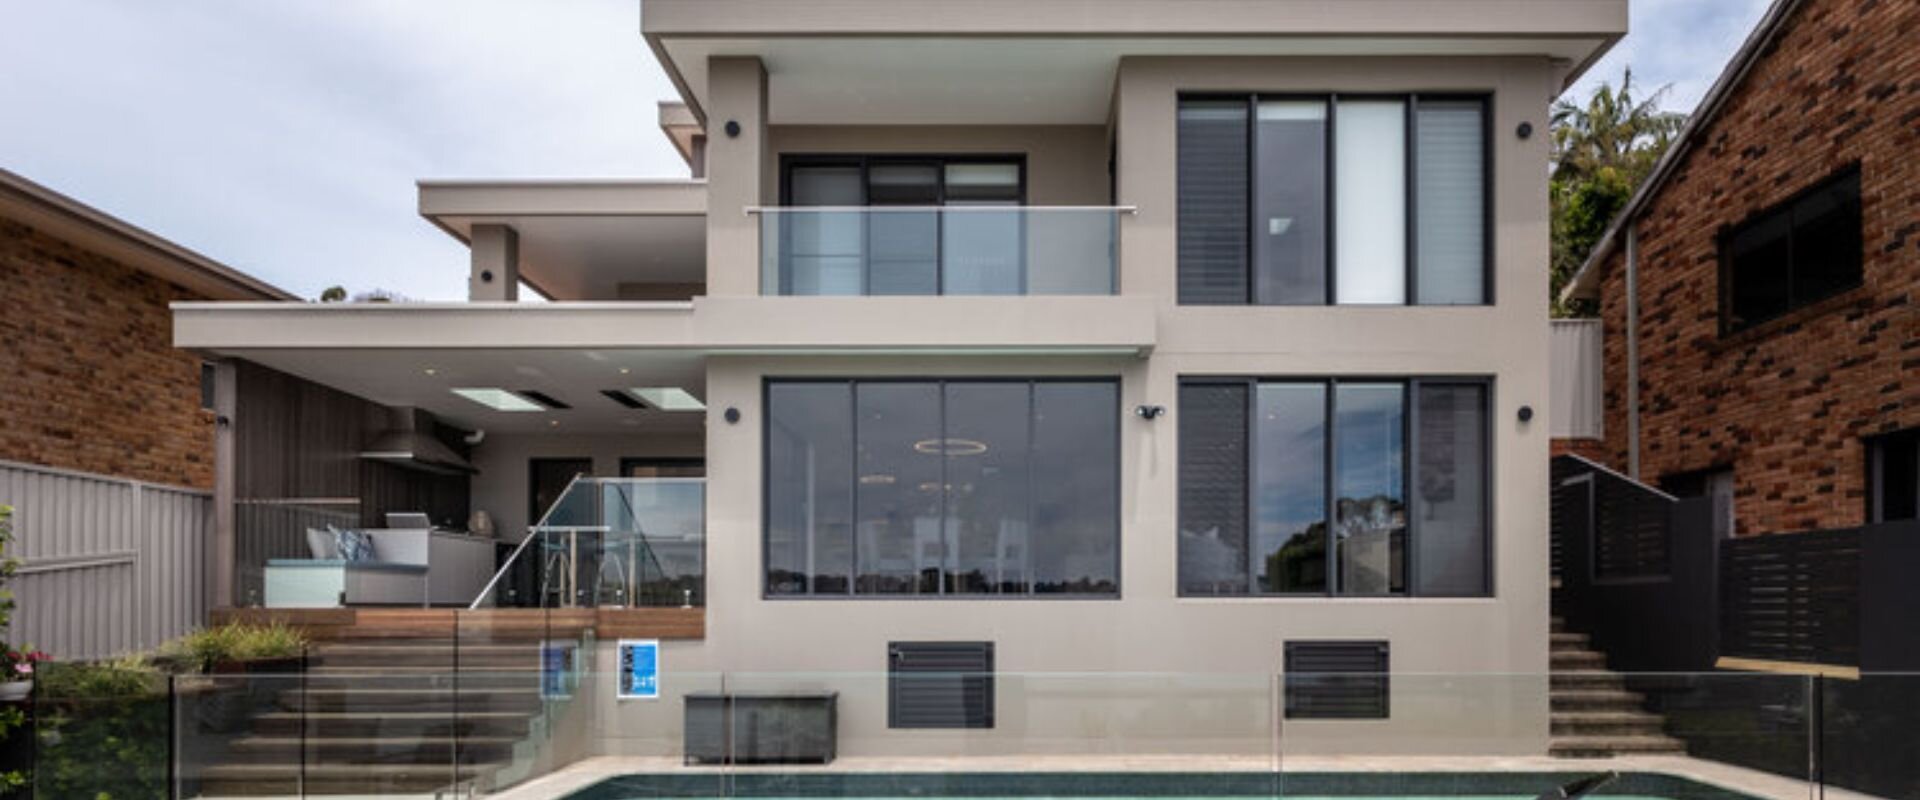 Top Luxury Home Builders Sydney Lux